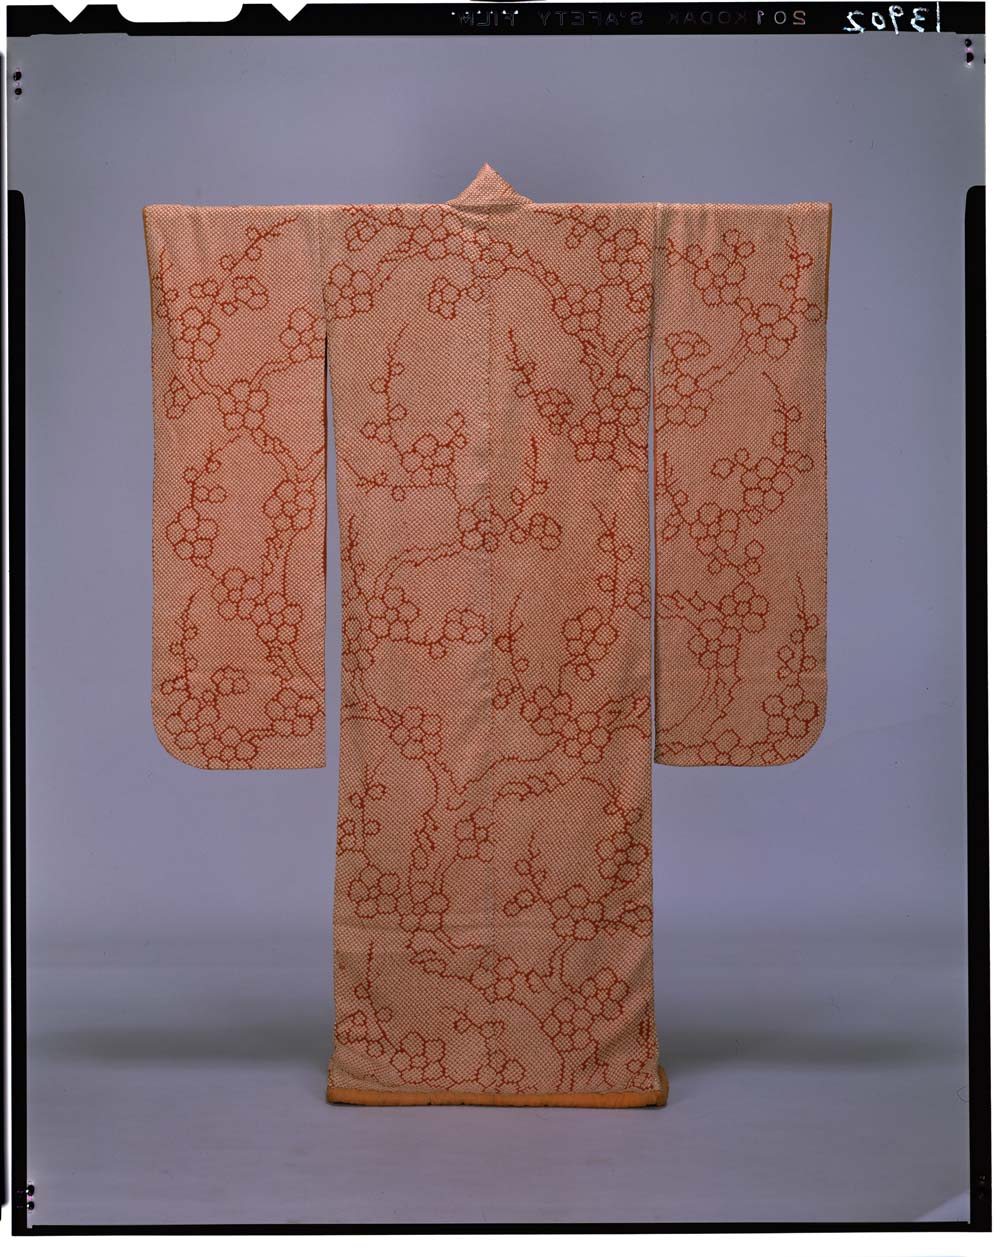 C0013902 紅綸子地梅樹模様振袖 - 東京国立博物館 画像検索